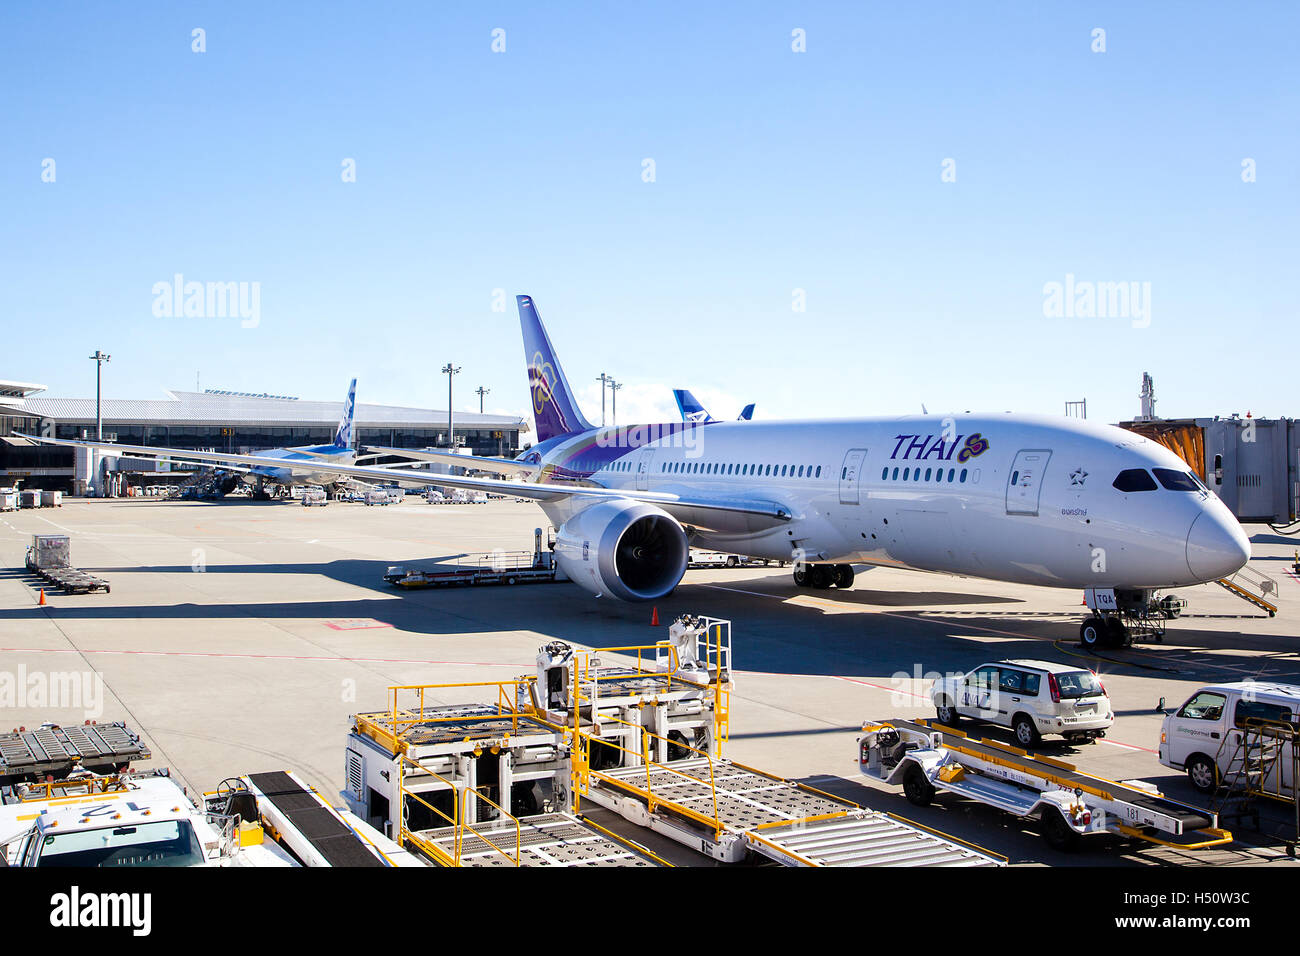 Tokyo; Japan - December 5; 2014: A Thai Airways plane being serviced on the tarmac of Tokyo Narita Airport. Stock Photo